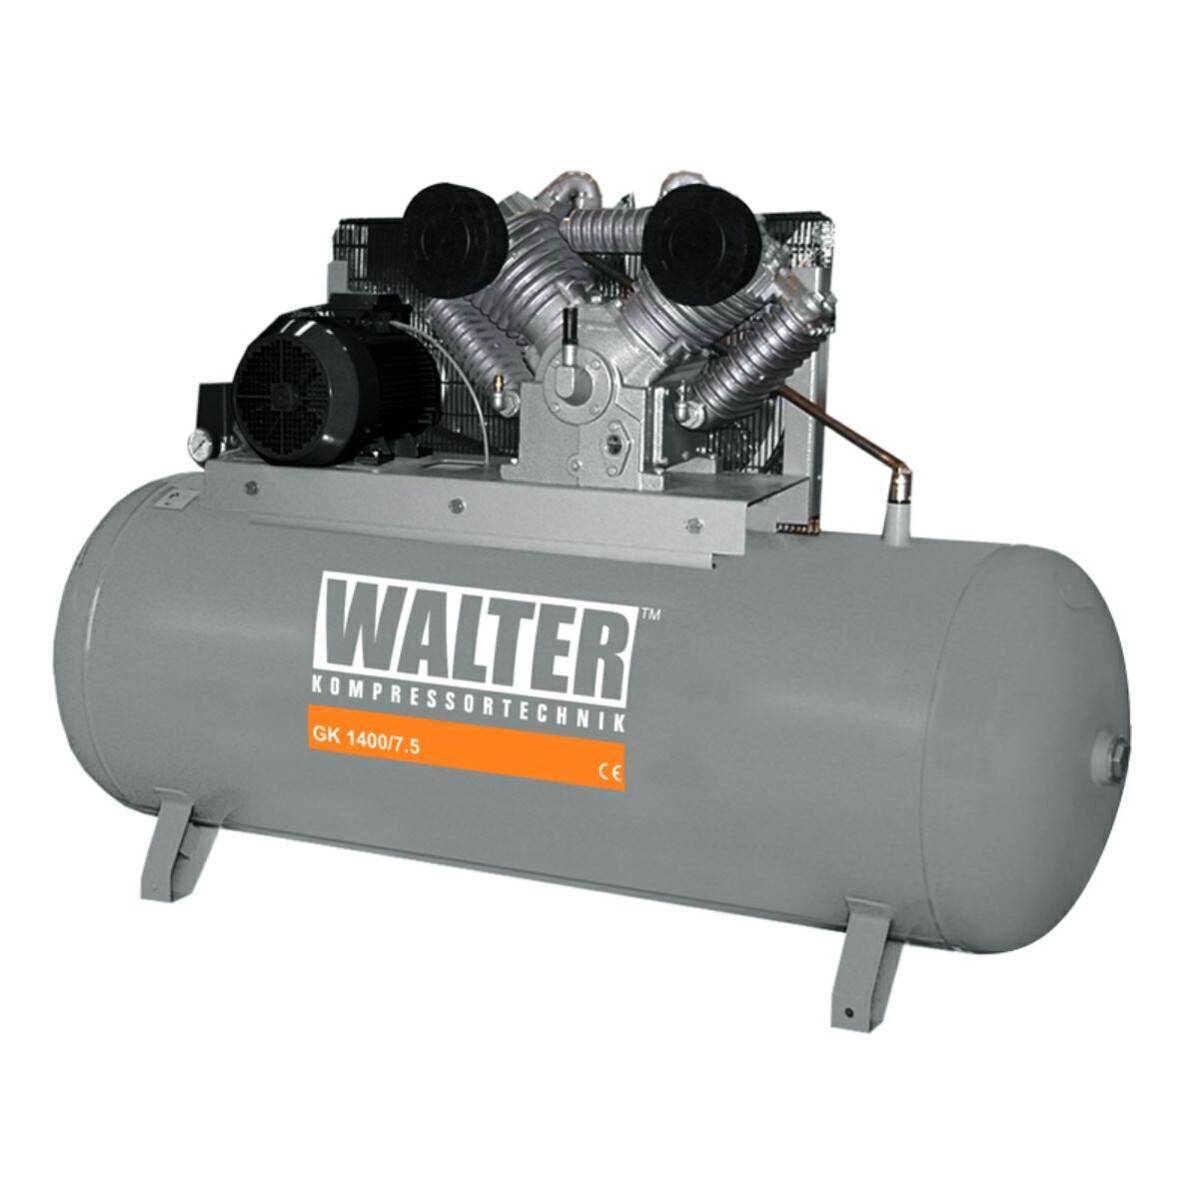 Kompresor Walter GK1400-7,5/500 , 500 l